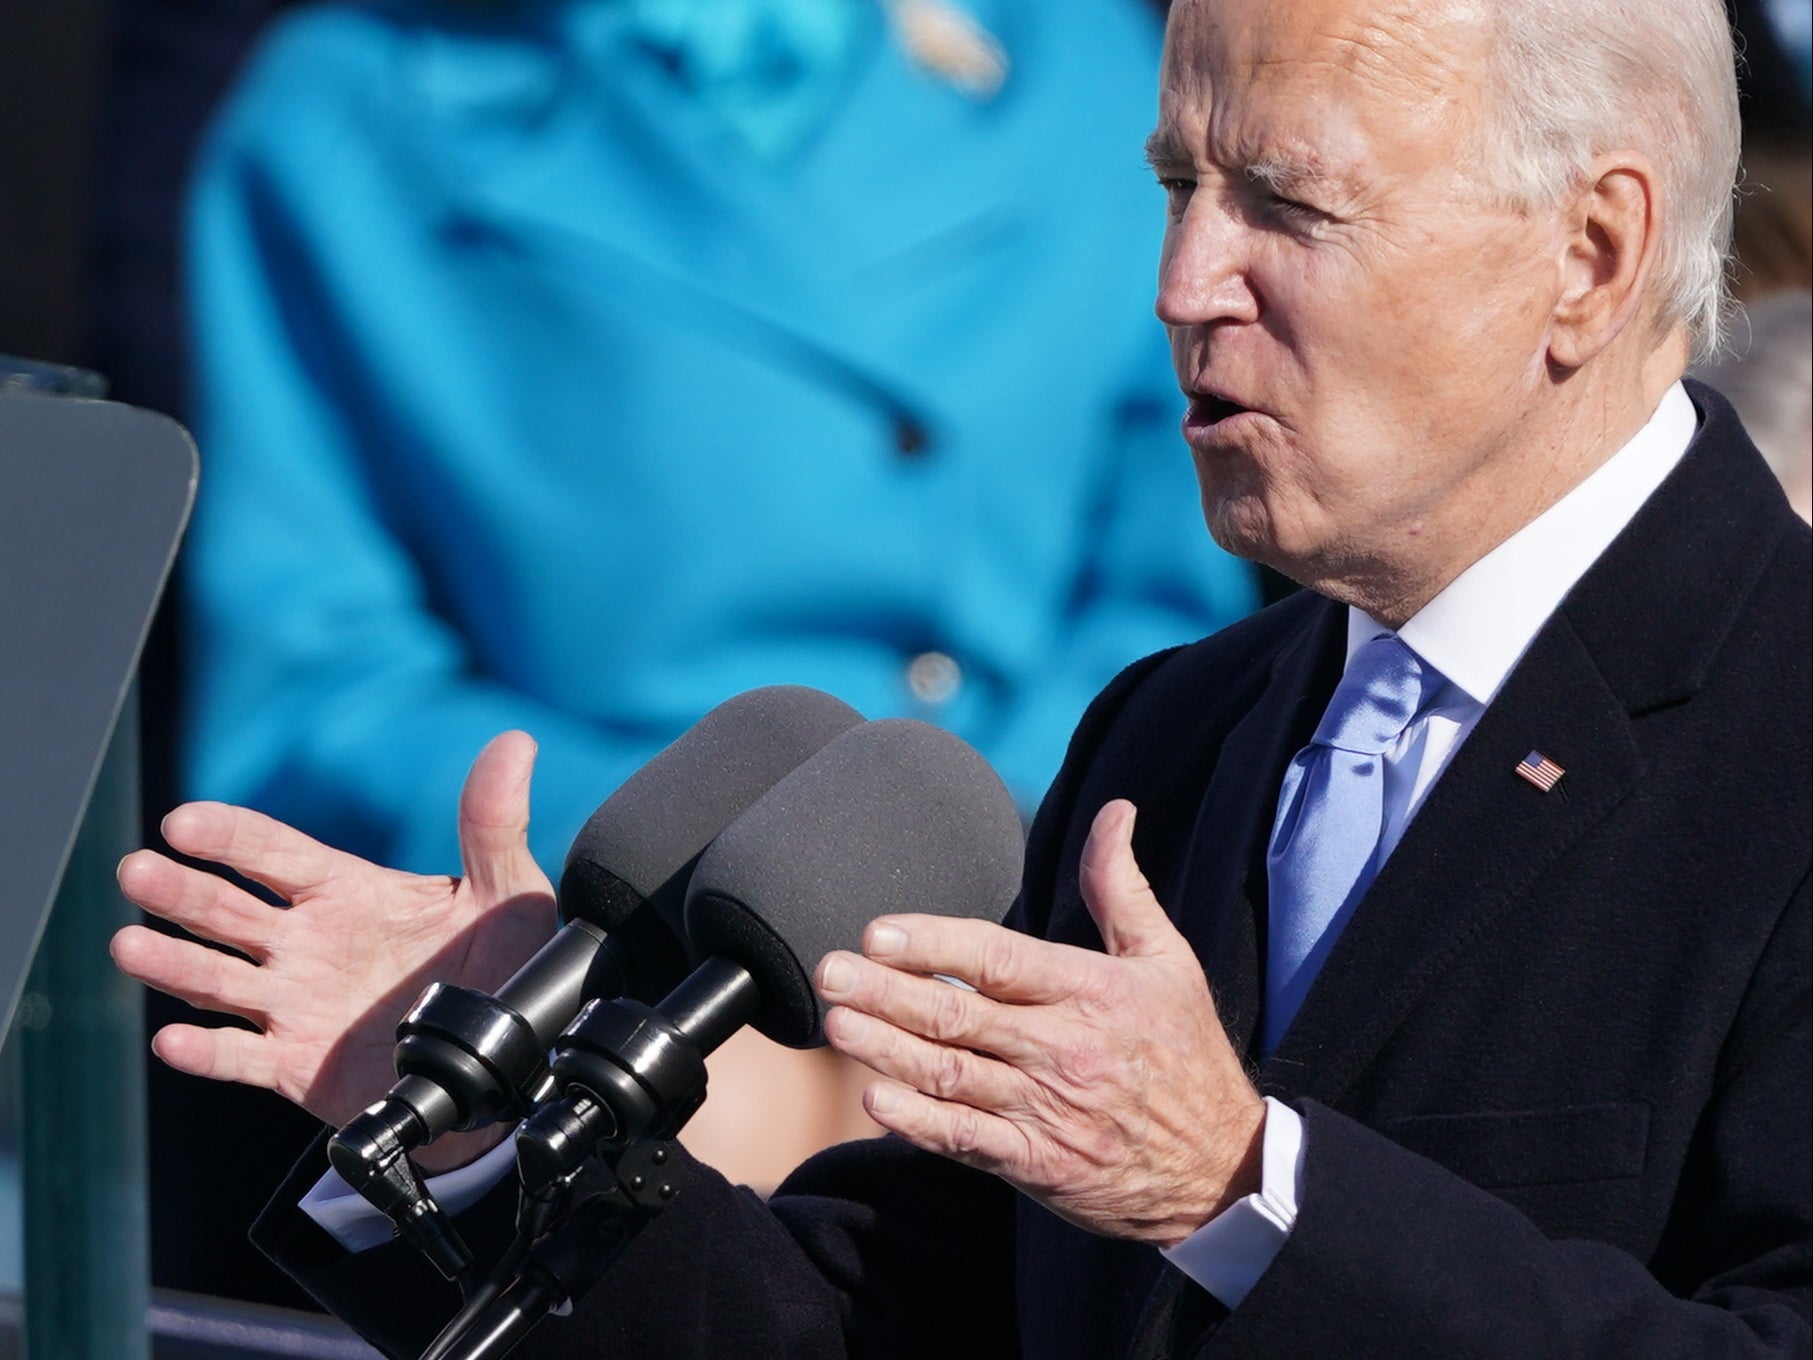 Joe Biden's speech was the polar opposite of Trump’s divisive ‘American Carnage’ speech four years ago